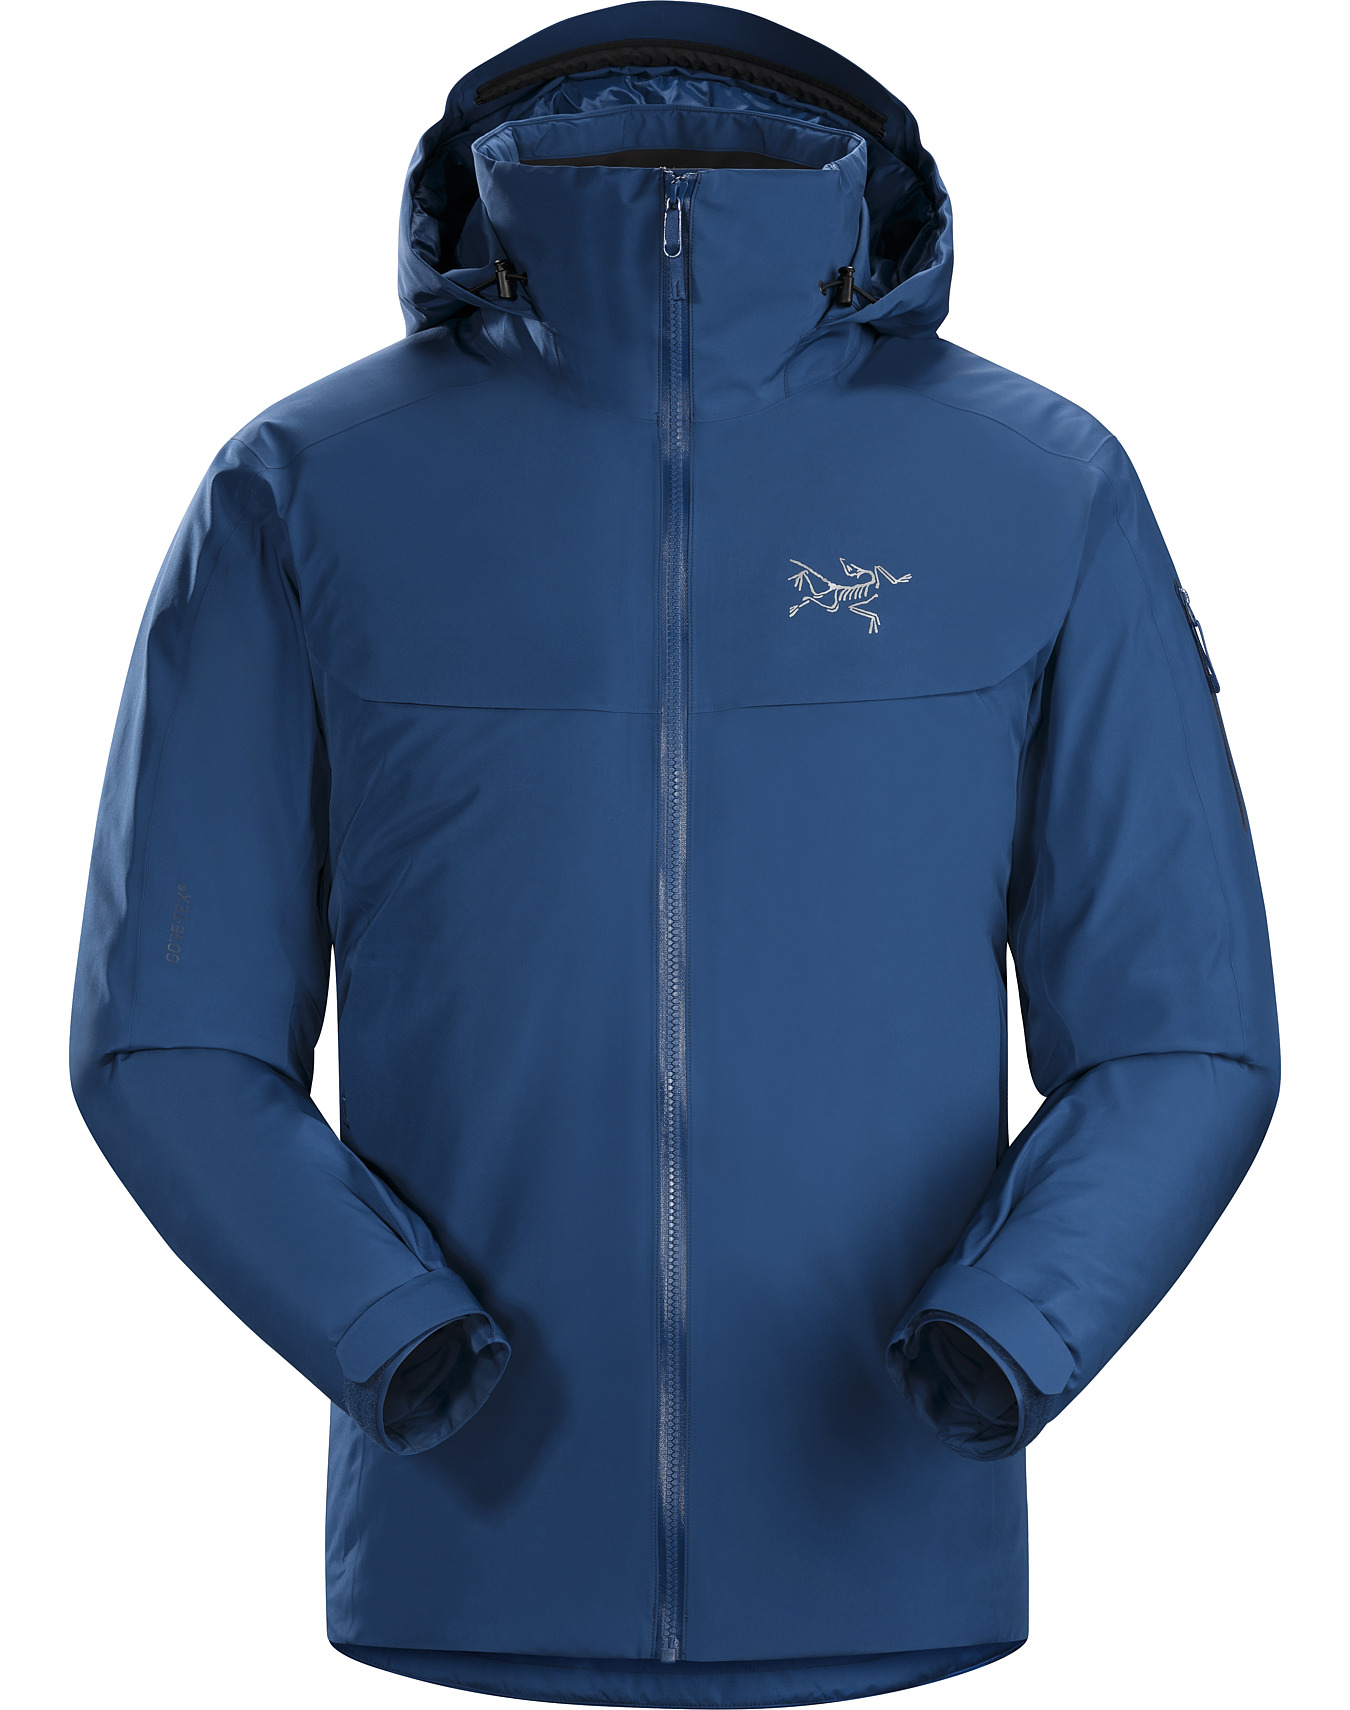 Arc'teryx Macai Jacket, men's, Fall 2017 colors of discontinued model